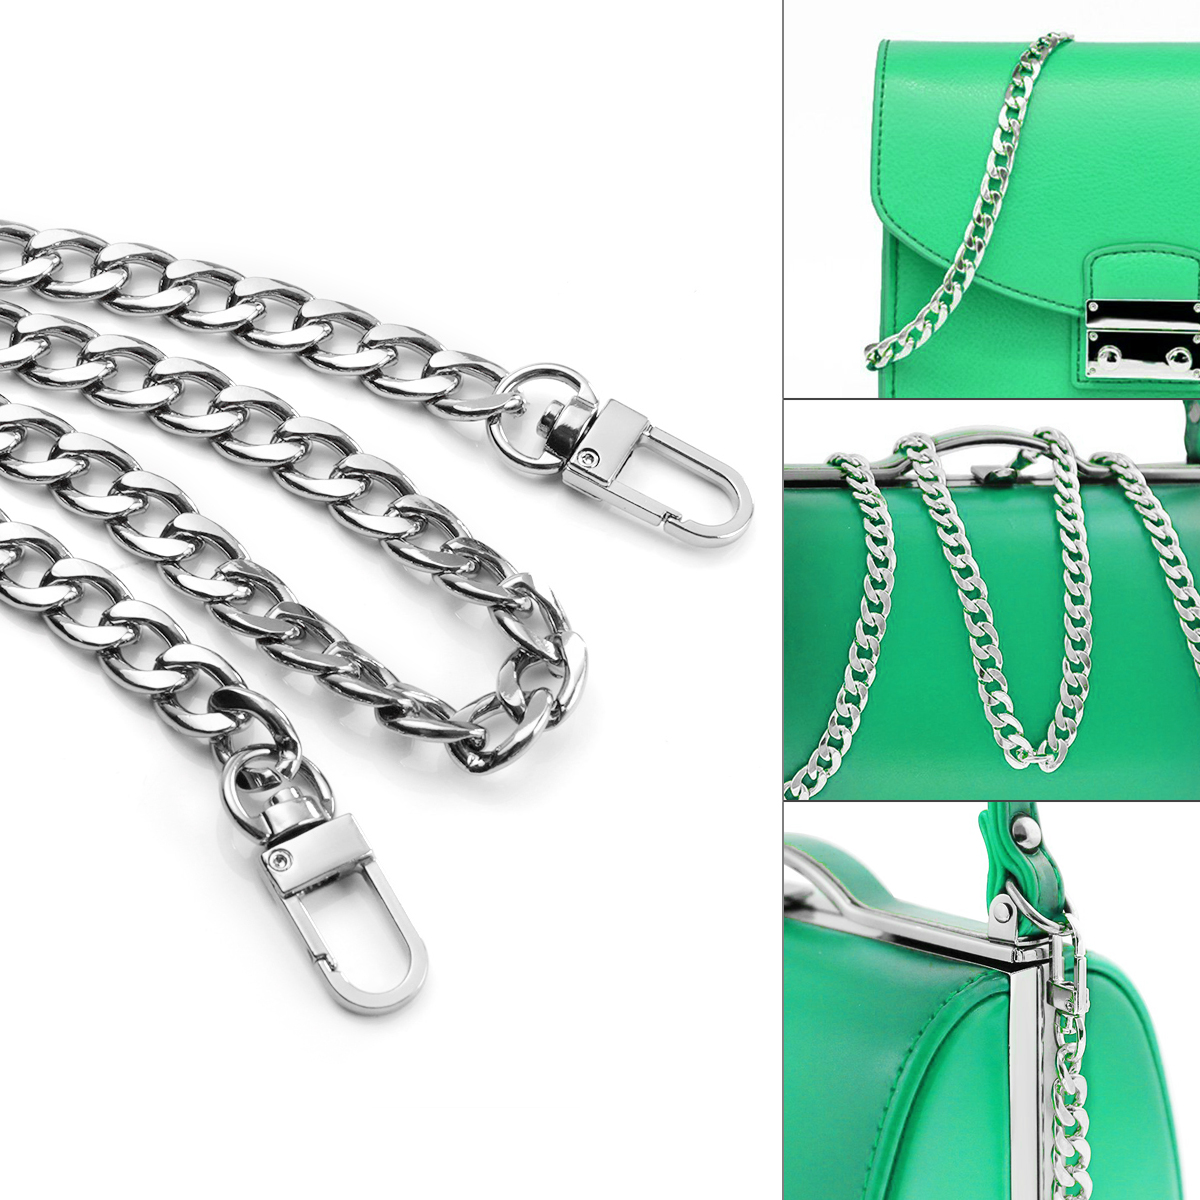 Bag Metal Flat Chain Replacement Strap for Handbag Purse - Silver